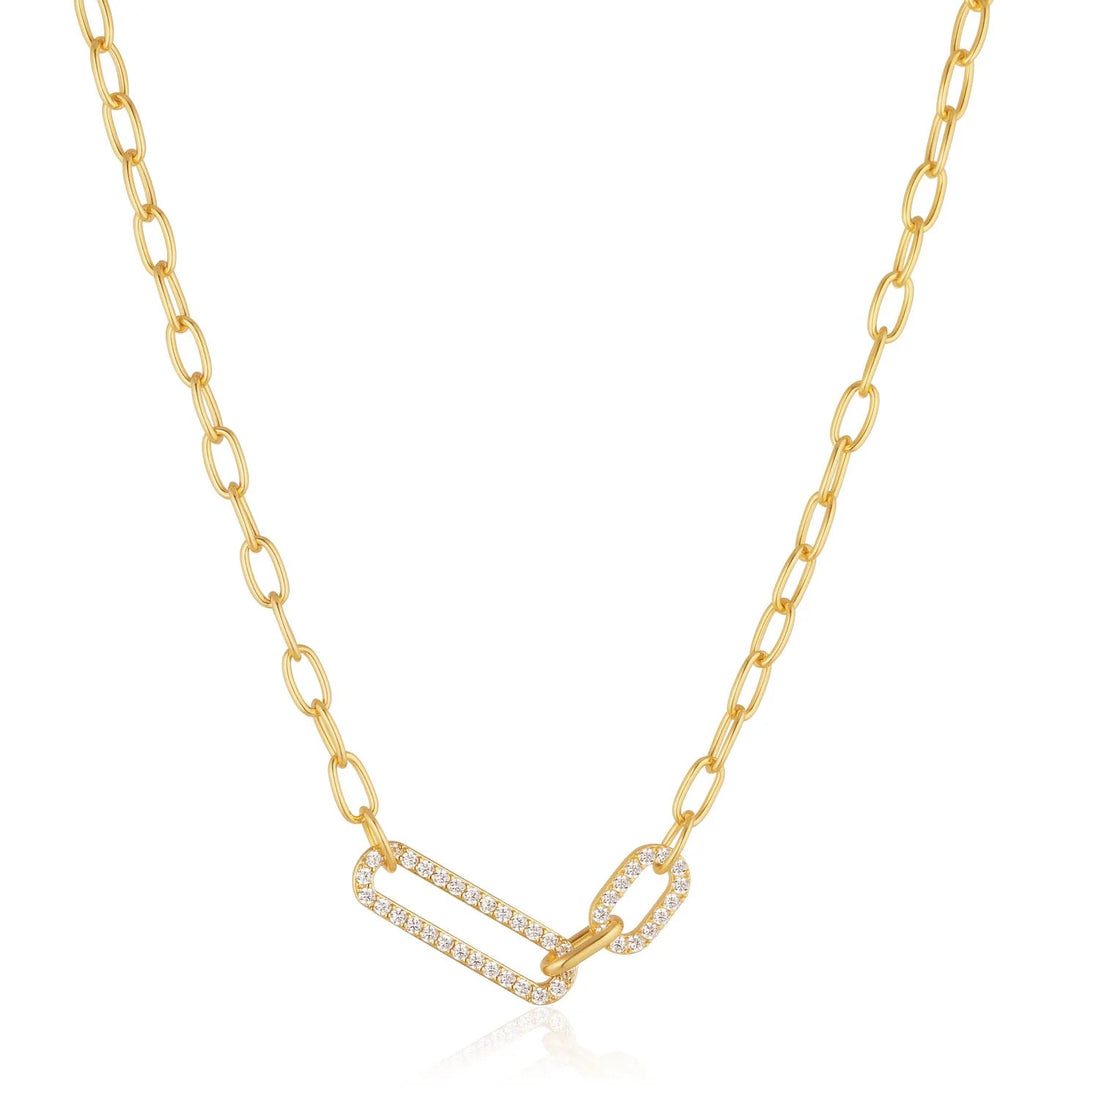  Sif Jakobs Jewellery - Halskette Capizzi Due - 18k vergoldet, mit weissen Zirkonia - Gold - Beautiful Joy